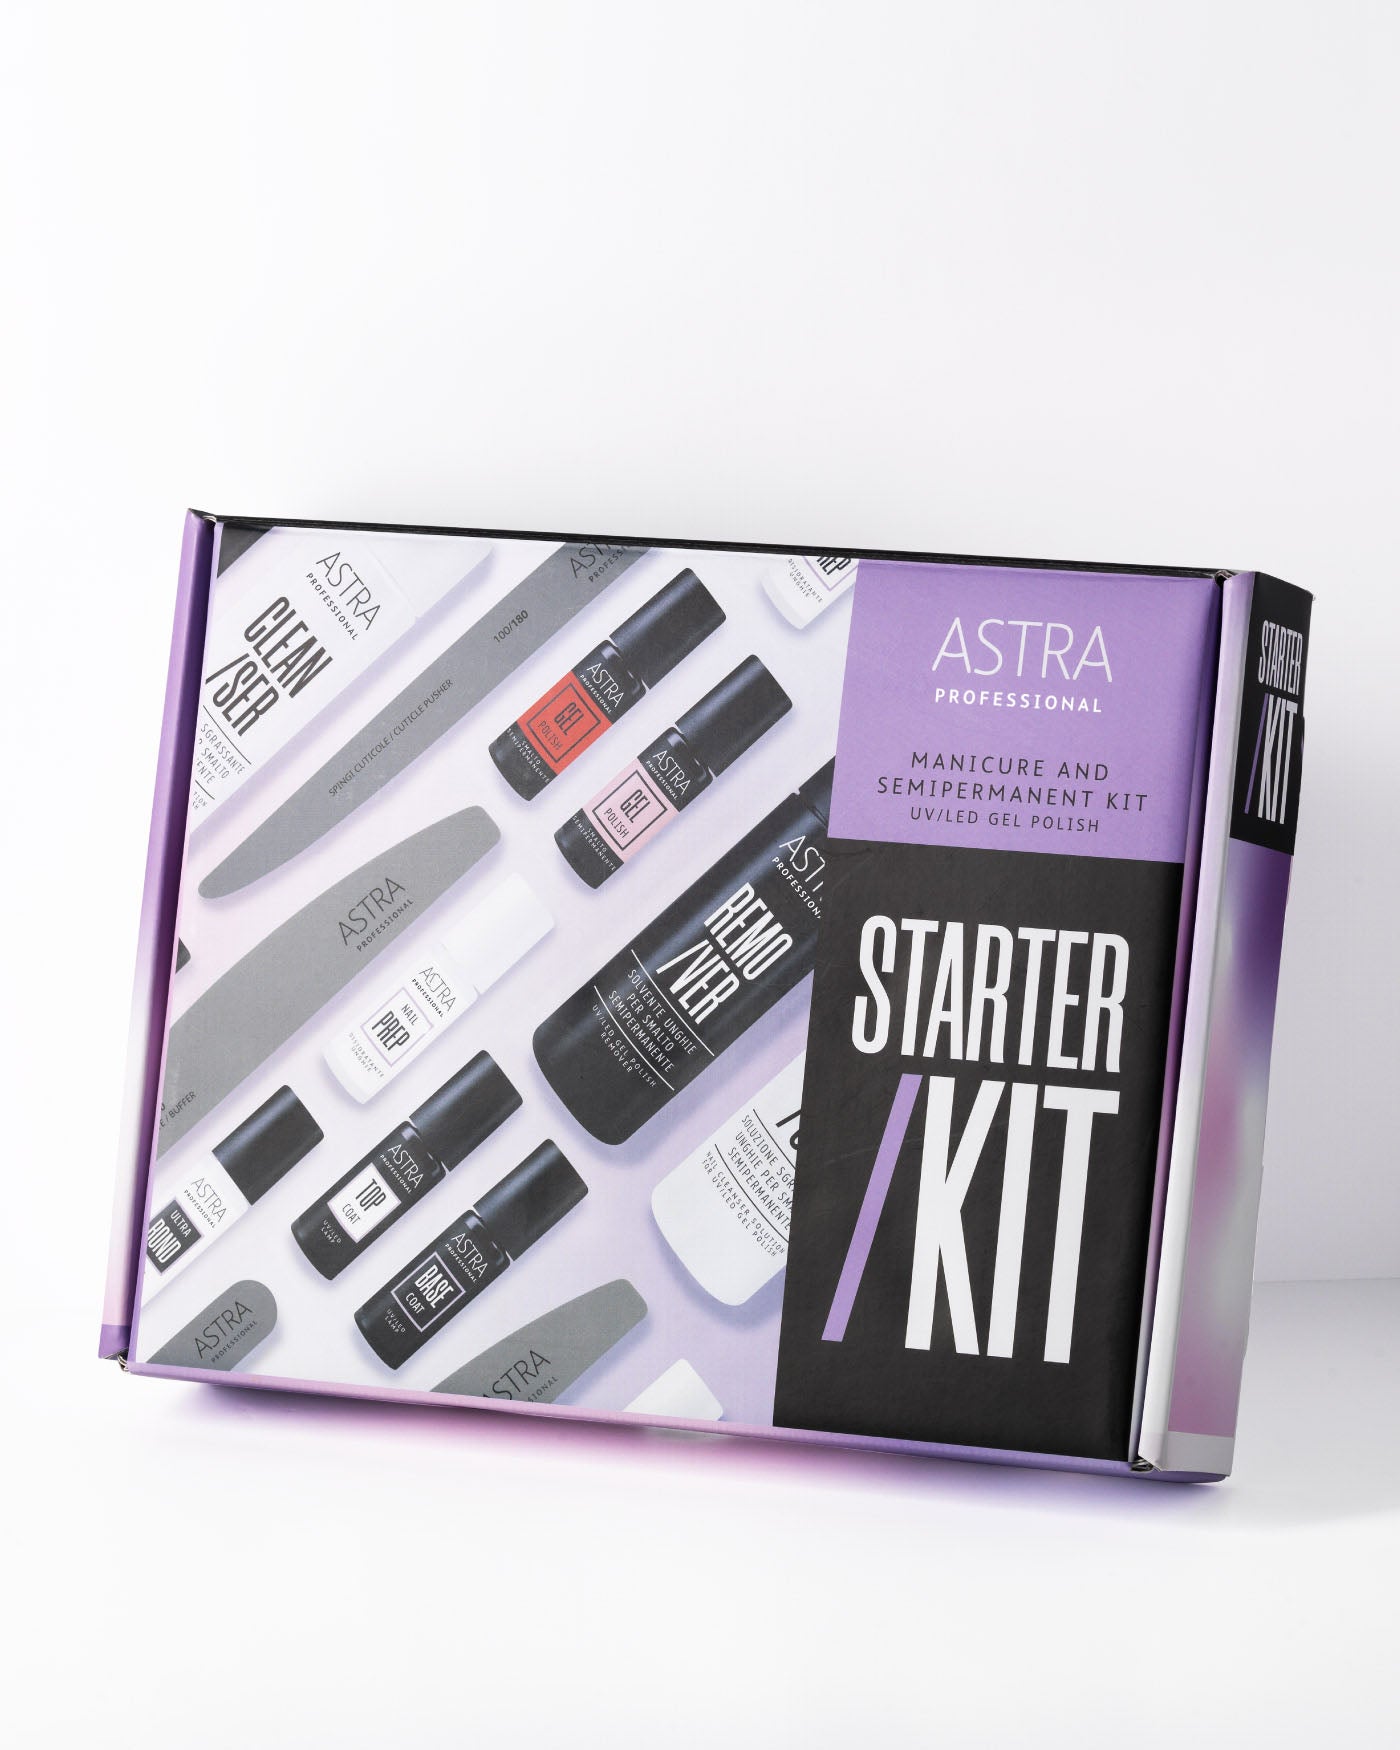 PROFESSIONAL STARTER KIT - Kit Manicure Smalto Semipermanente - Default Title - Astra Make-Up